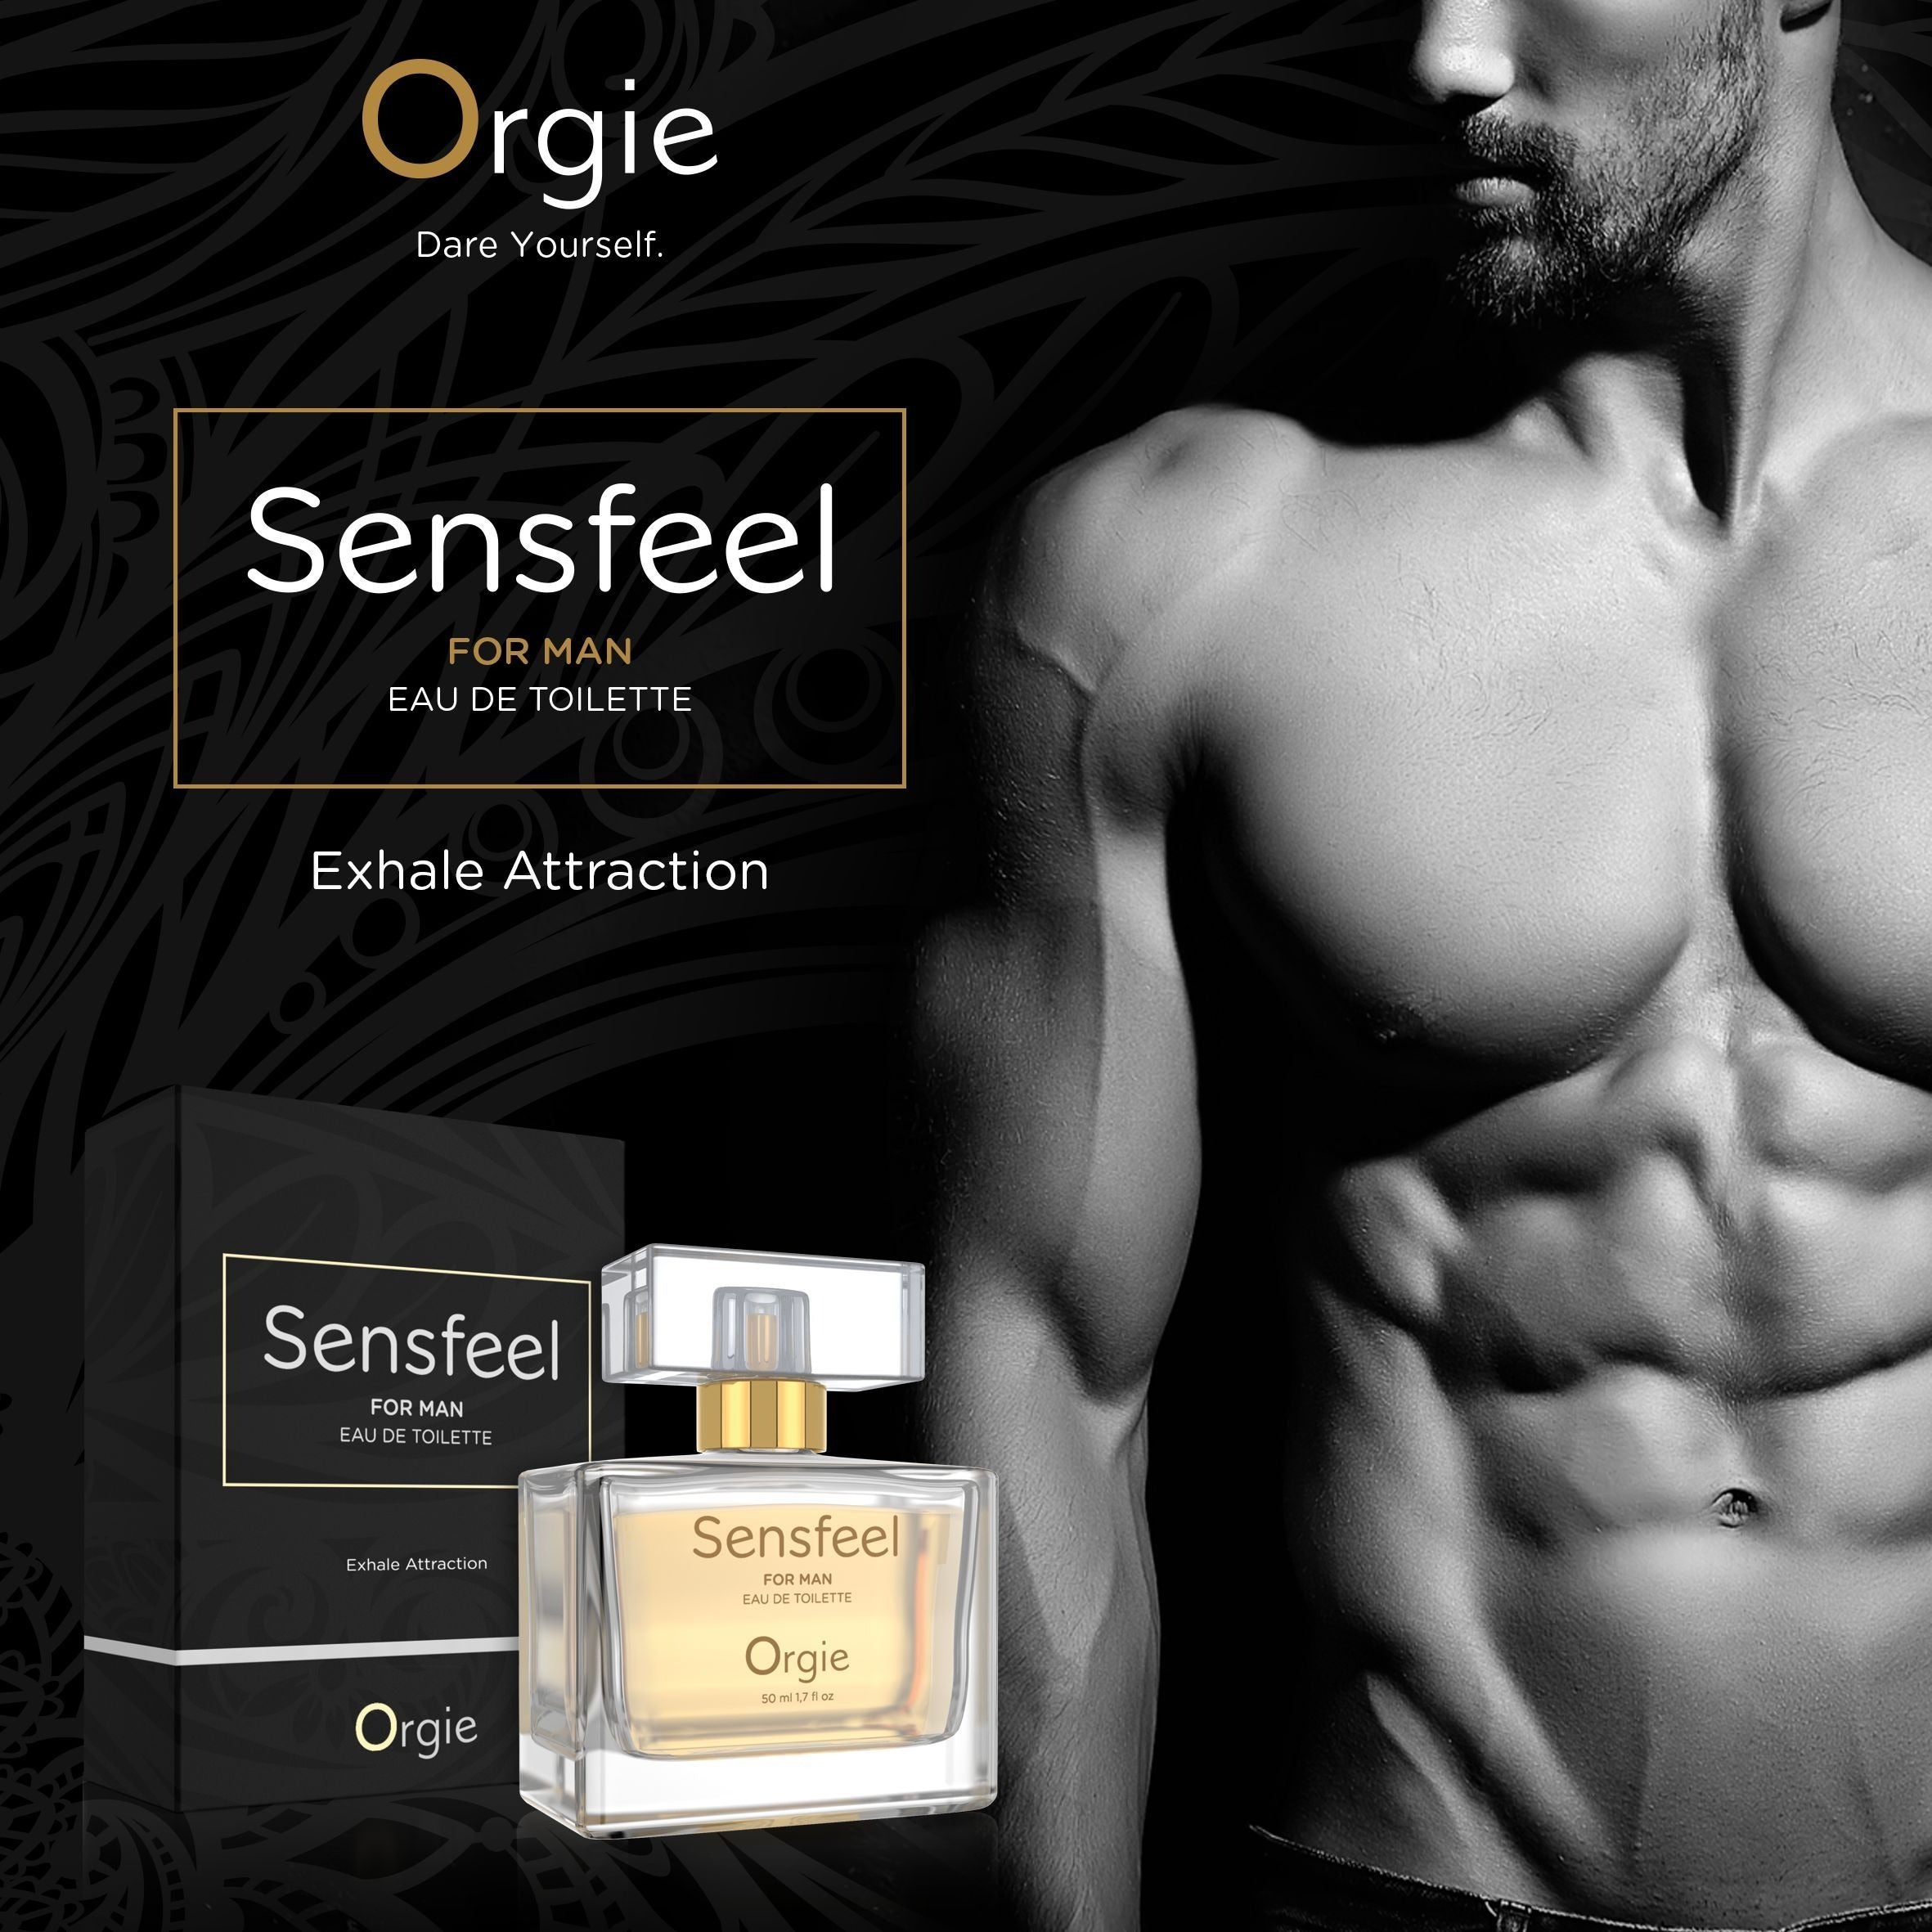 Image of Orgie Sensfeel for Man Travel Size Pheromome Perfume 10 ml